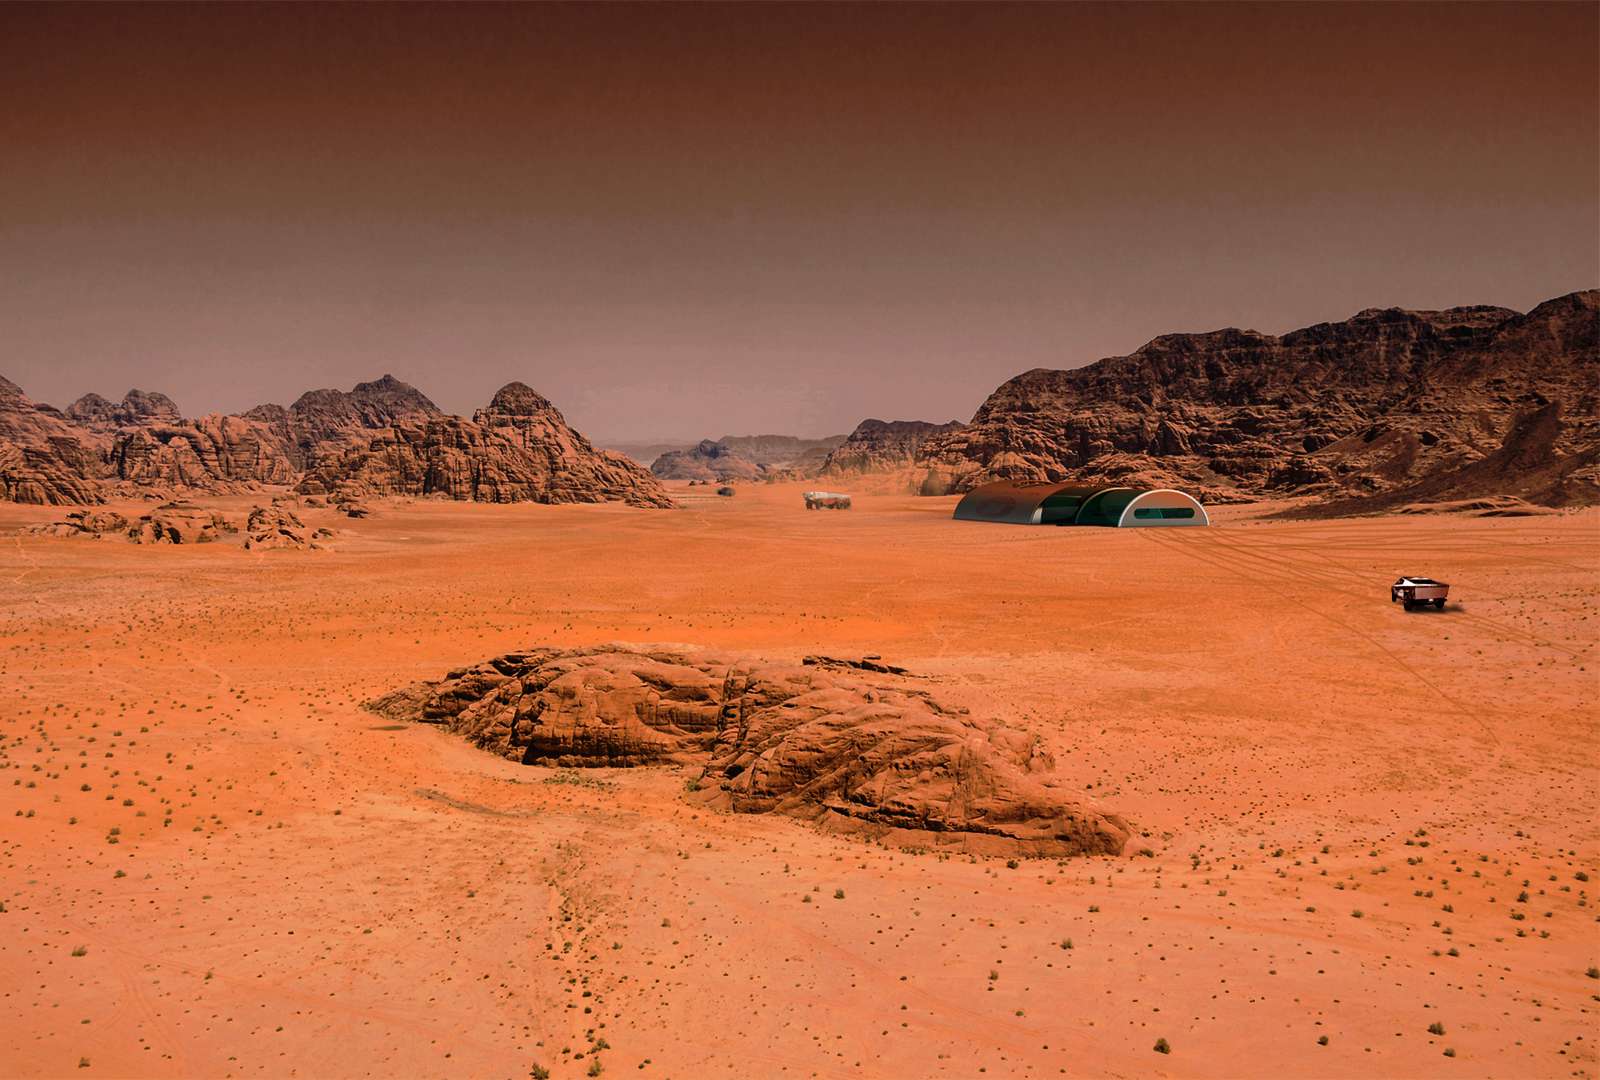 Martian Service Rest Station